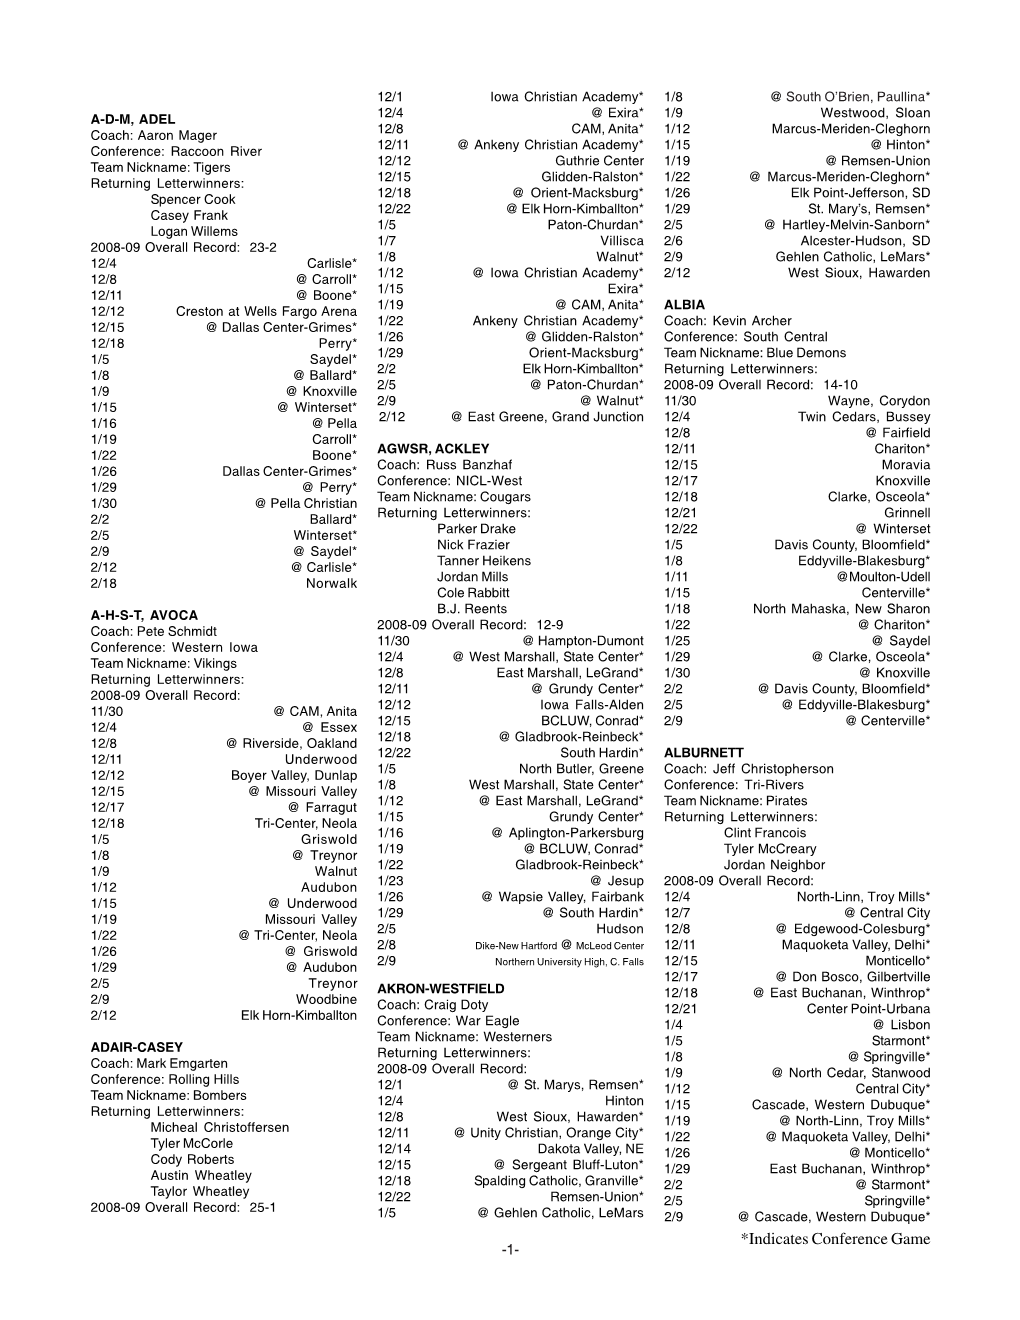 Basketball Schedules 2009-2010